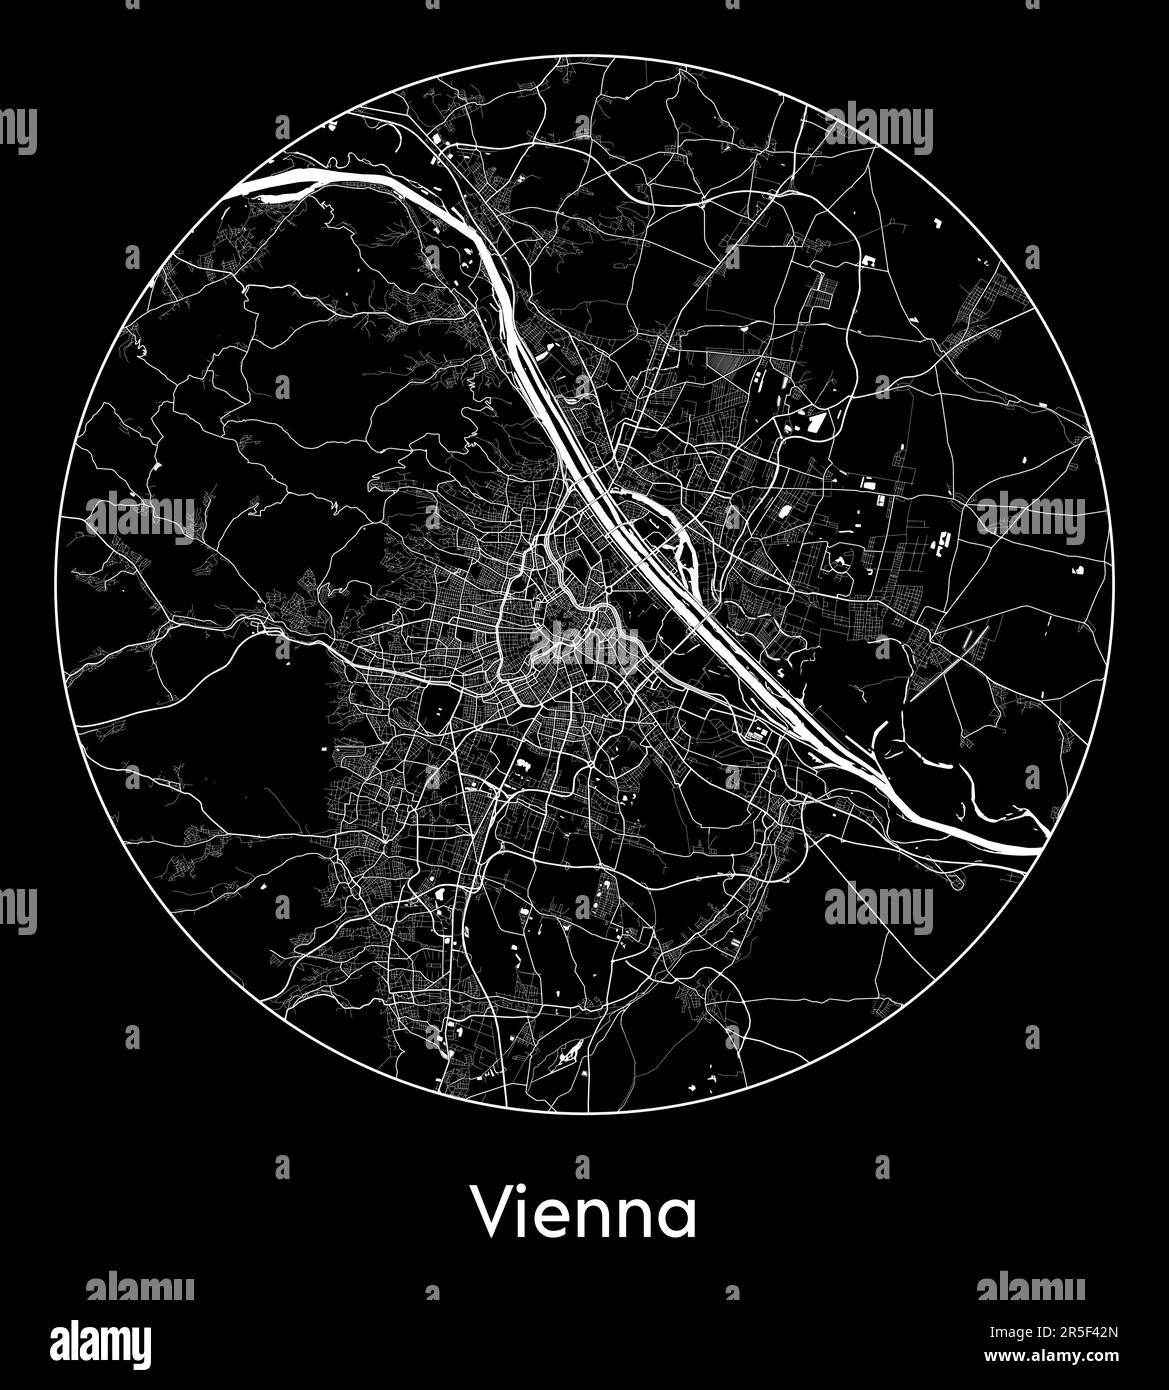 City Map Vienna Austria Europe vector illustration Stock Vector